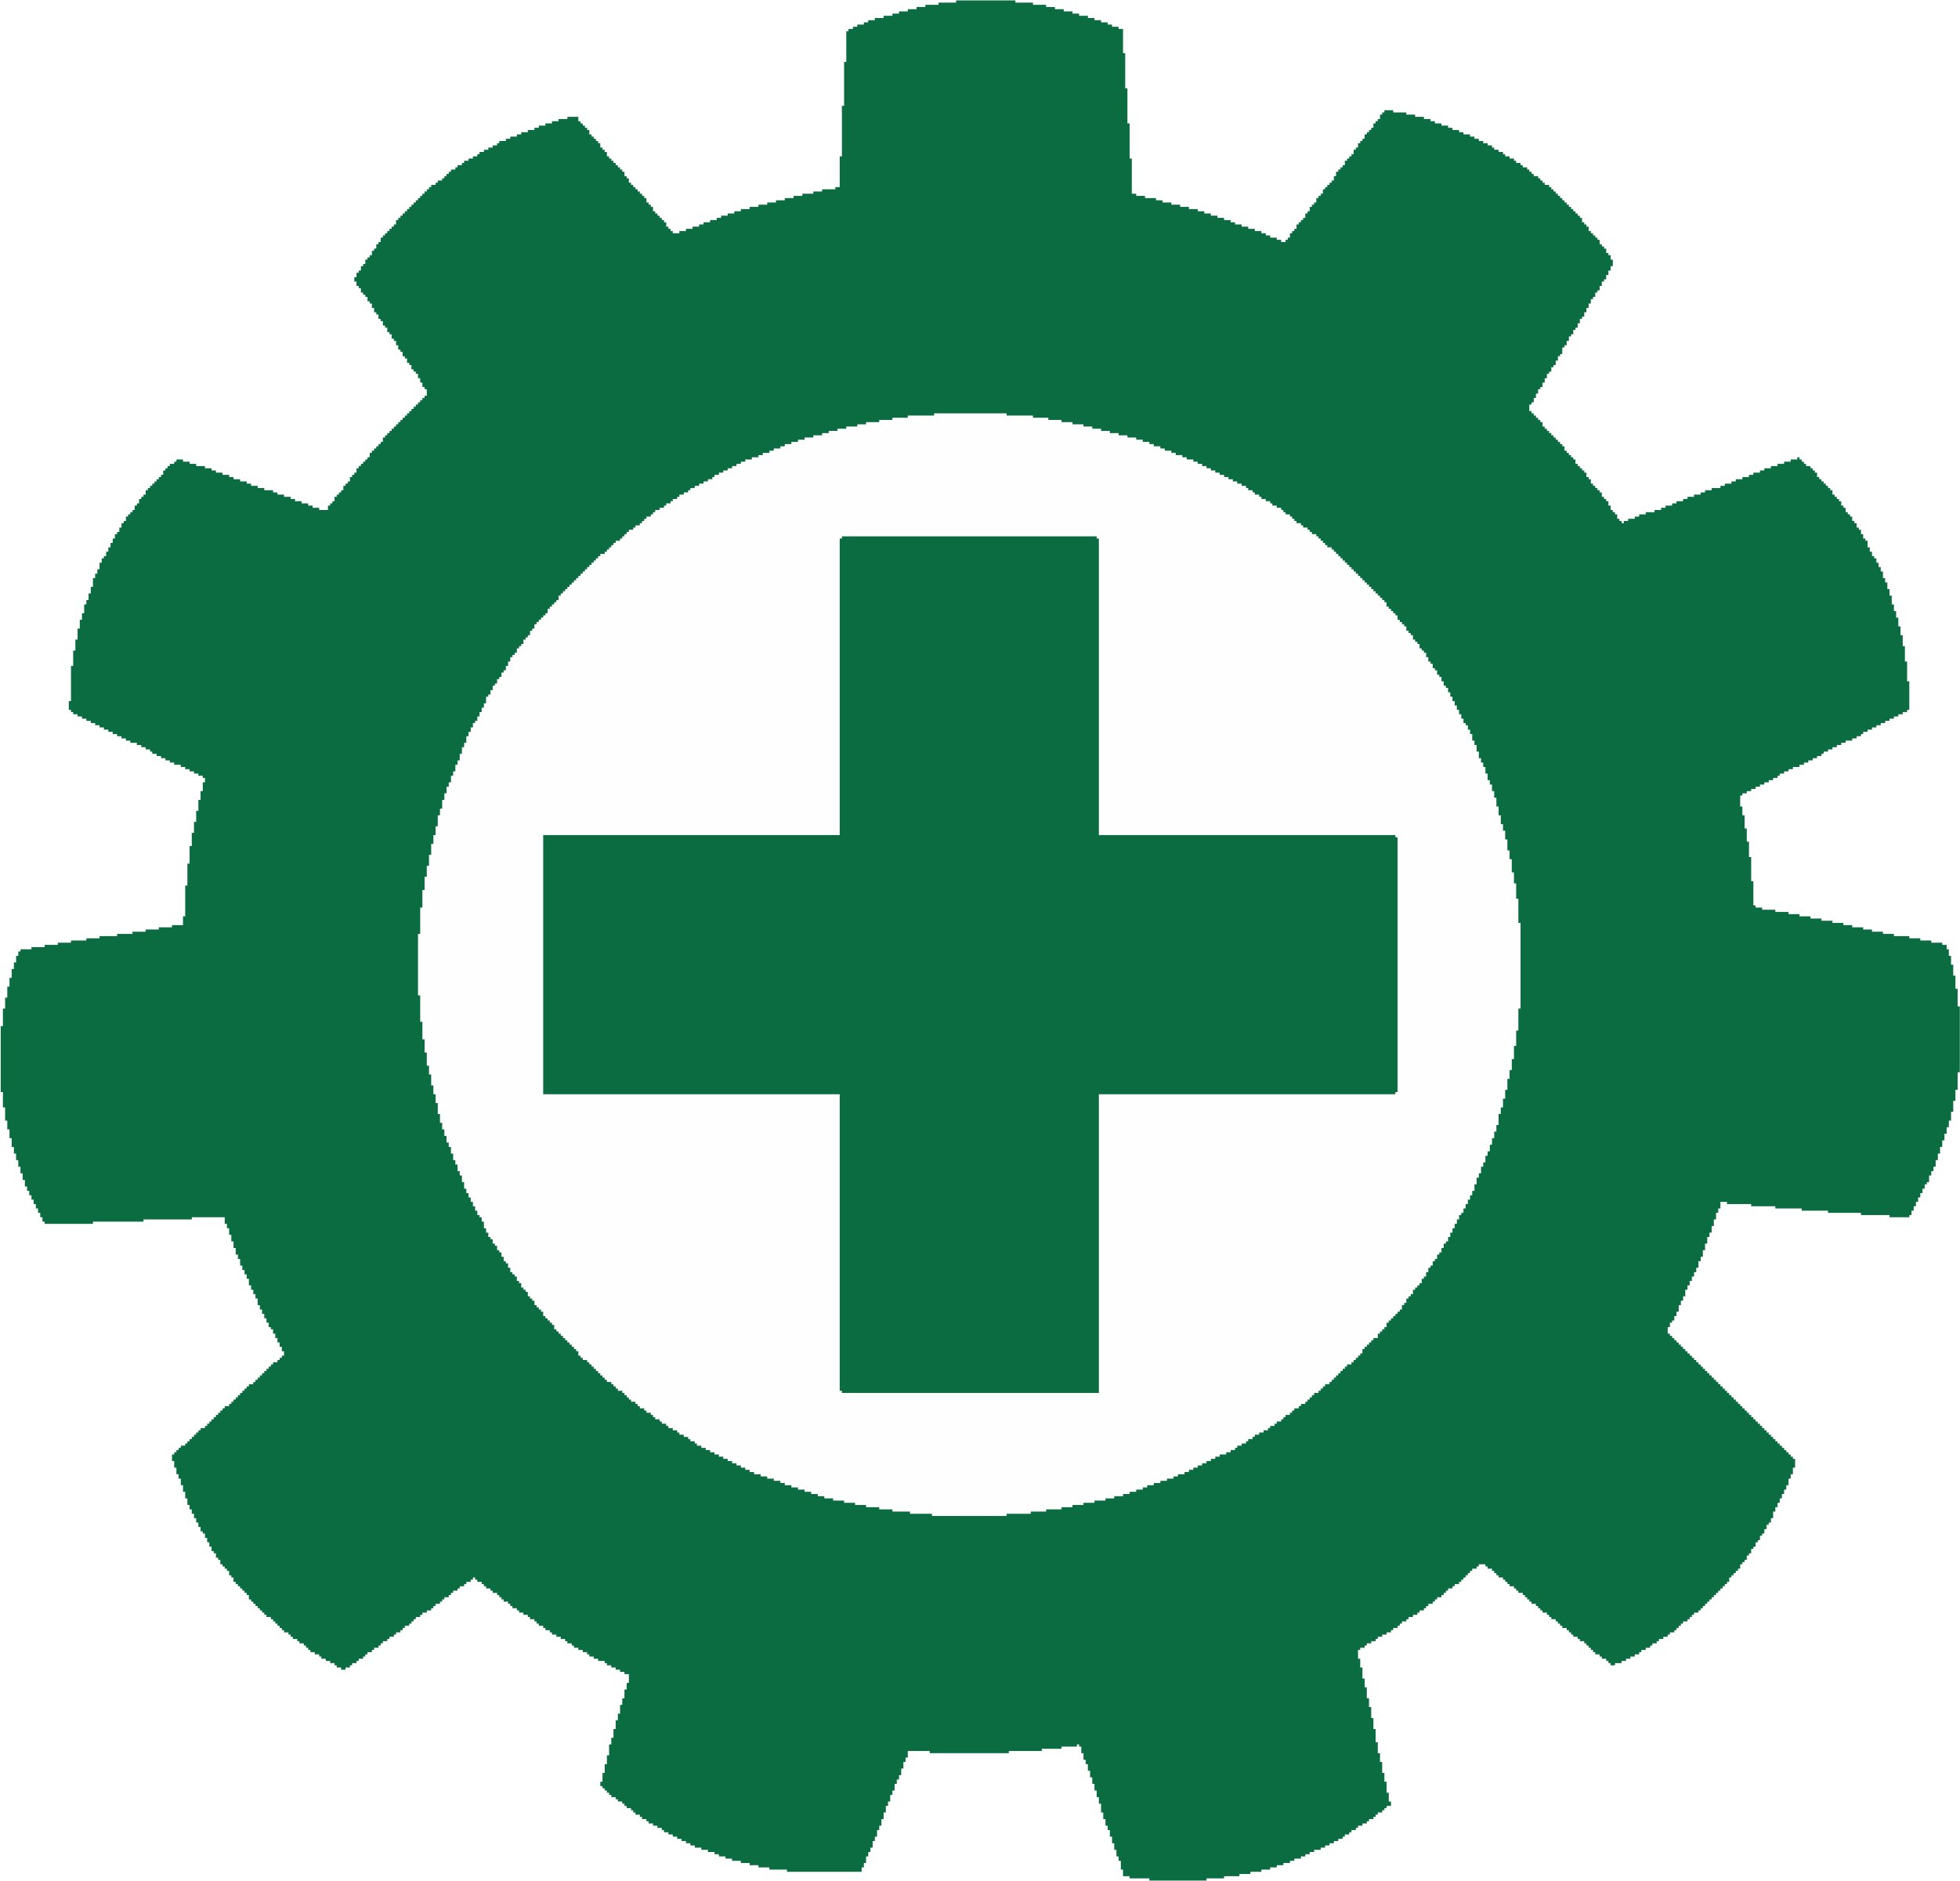 Arti Lambang dan Logo K3 - Keselamatan dan Kesehatan Kerja